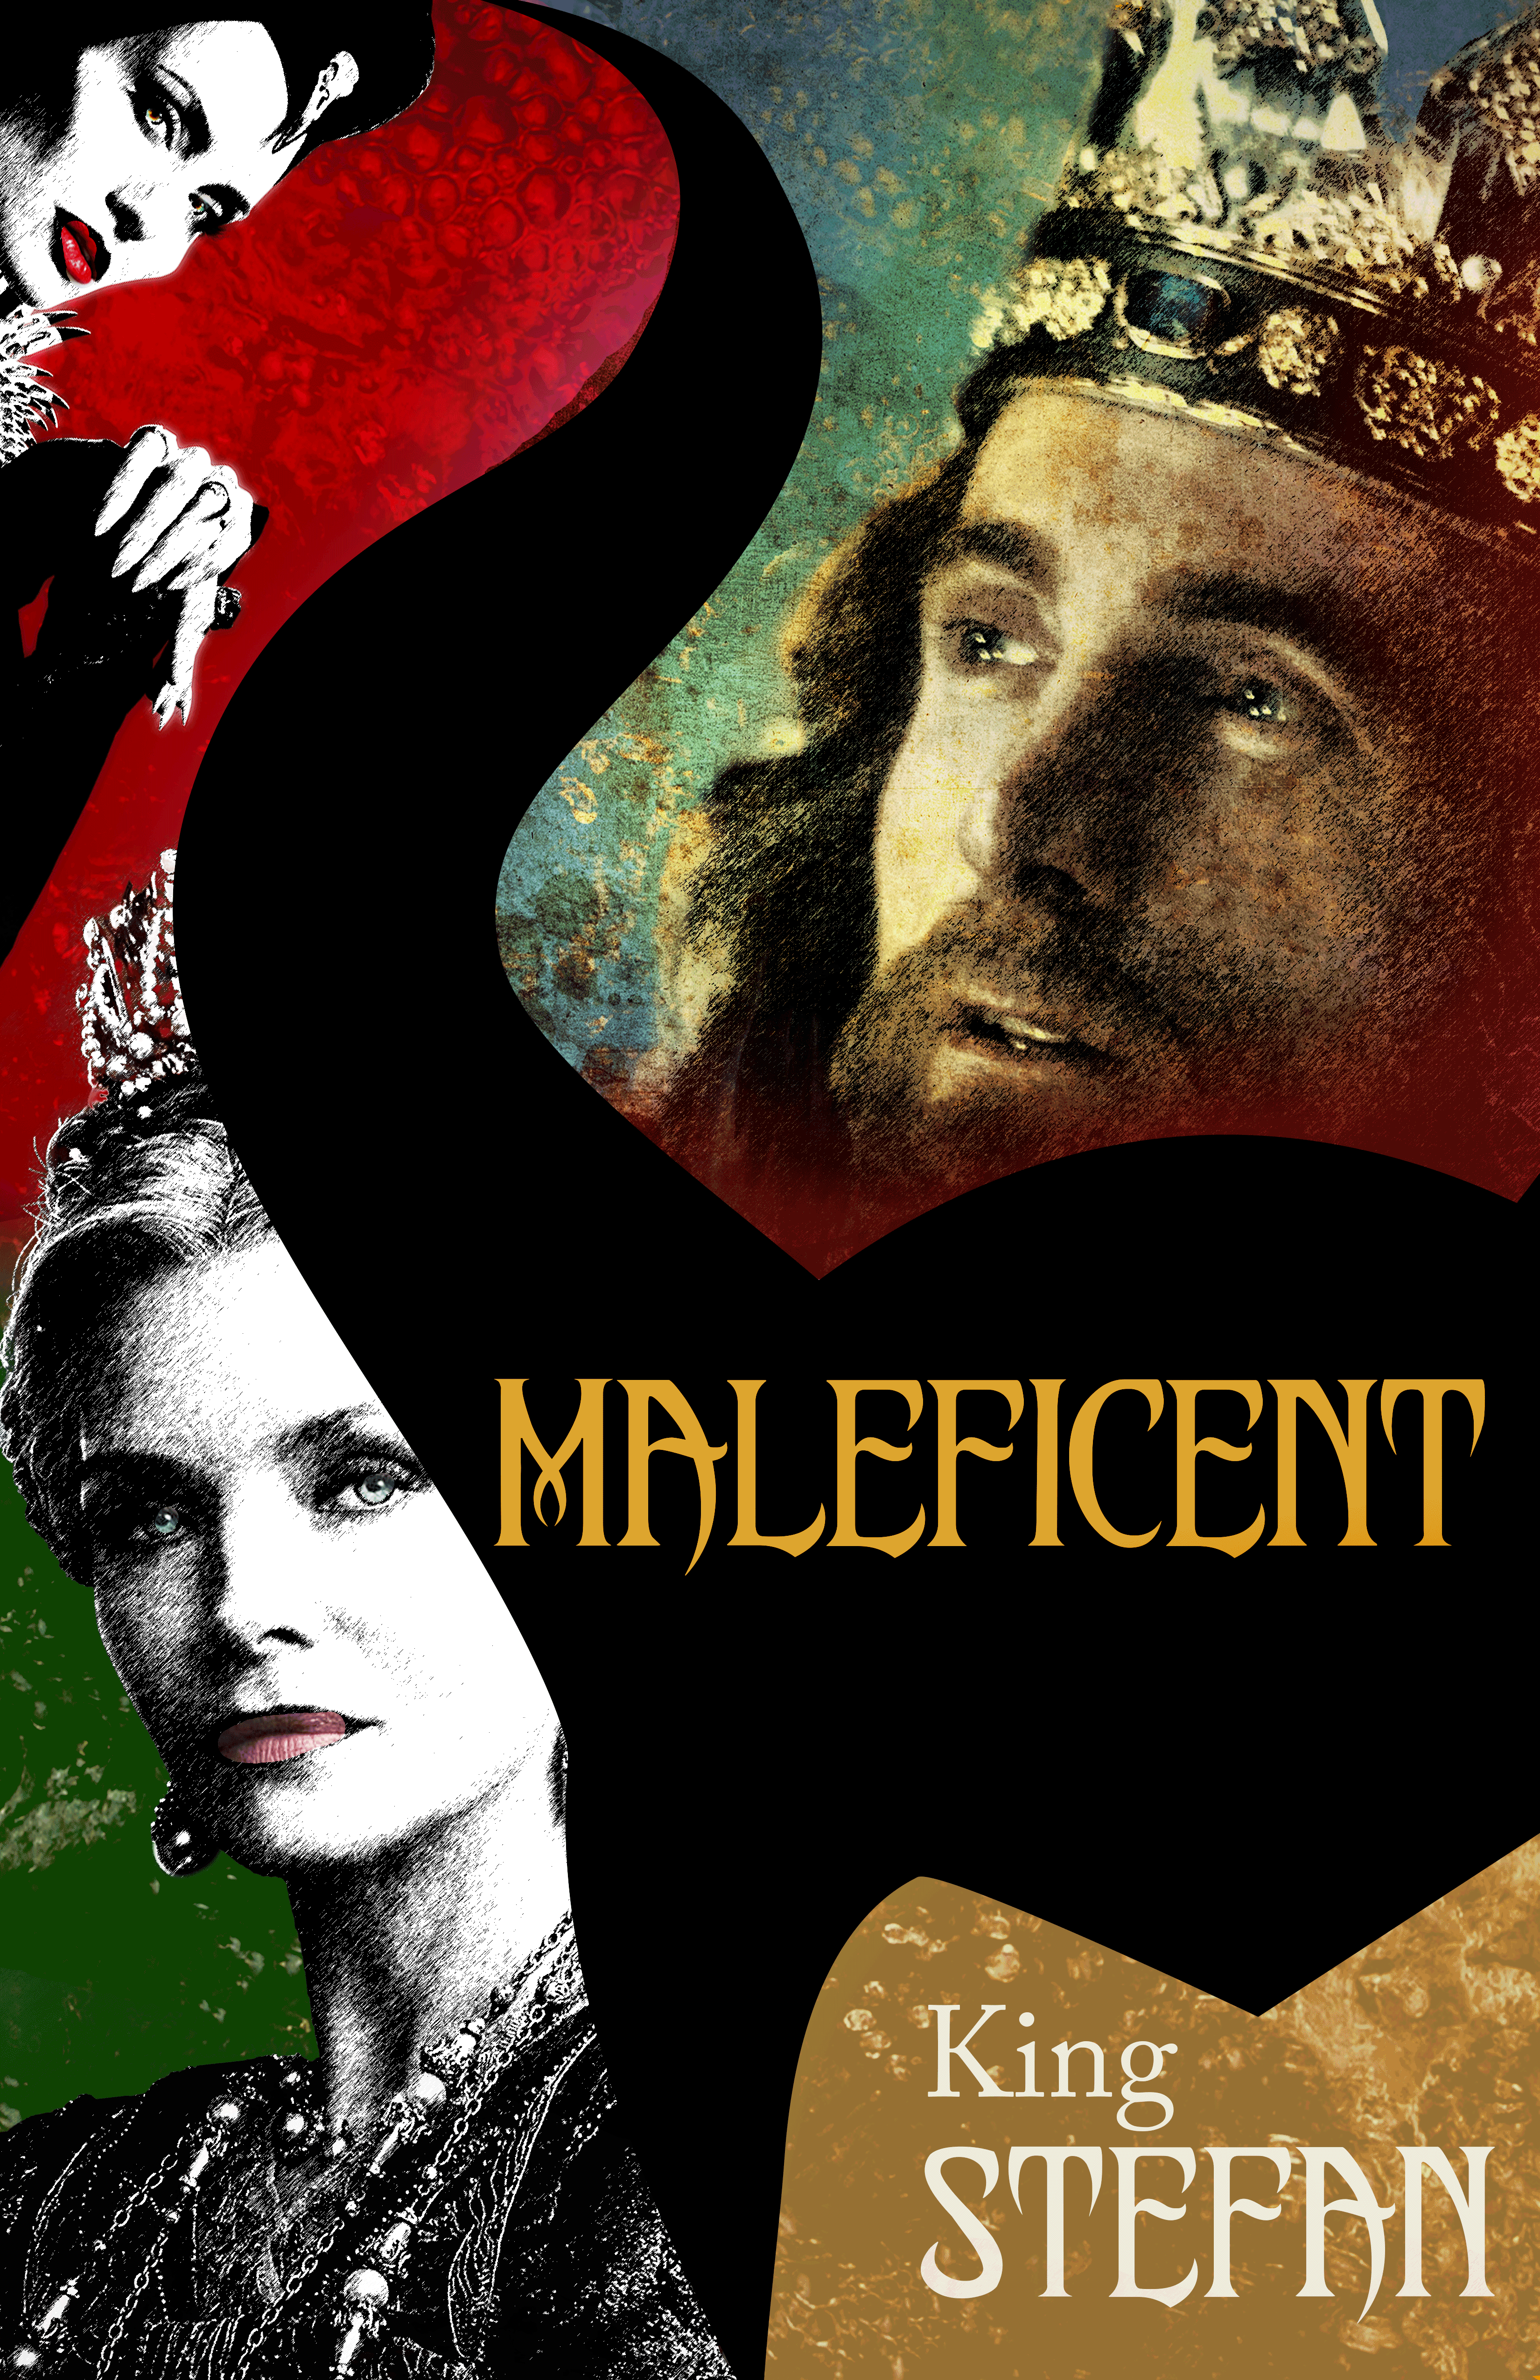 Maleficent Movie Poster